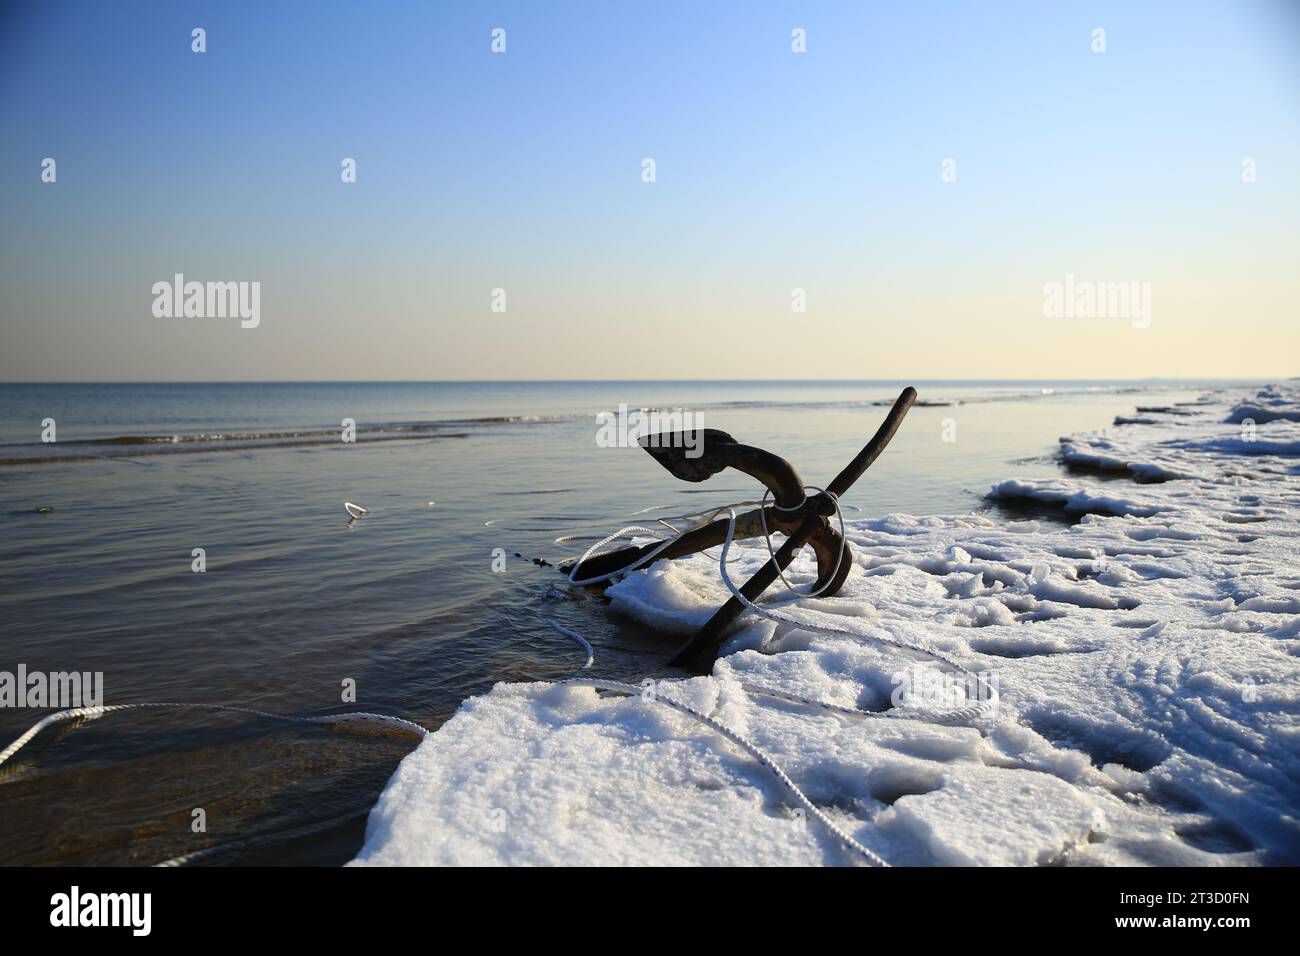 A close-up anchor at the icy ocean seashore Stock Photo